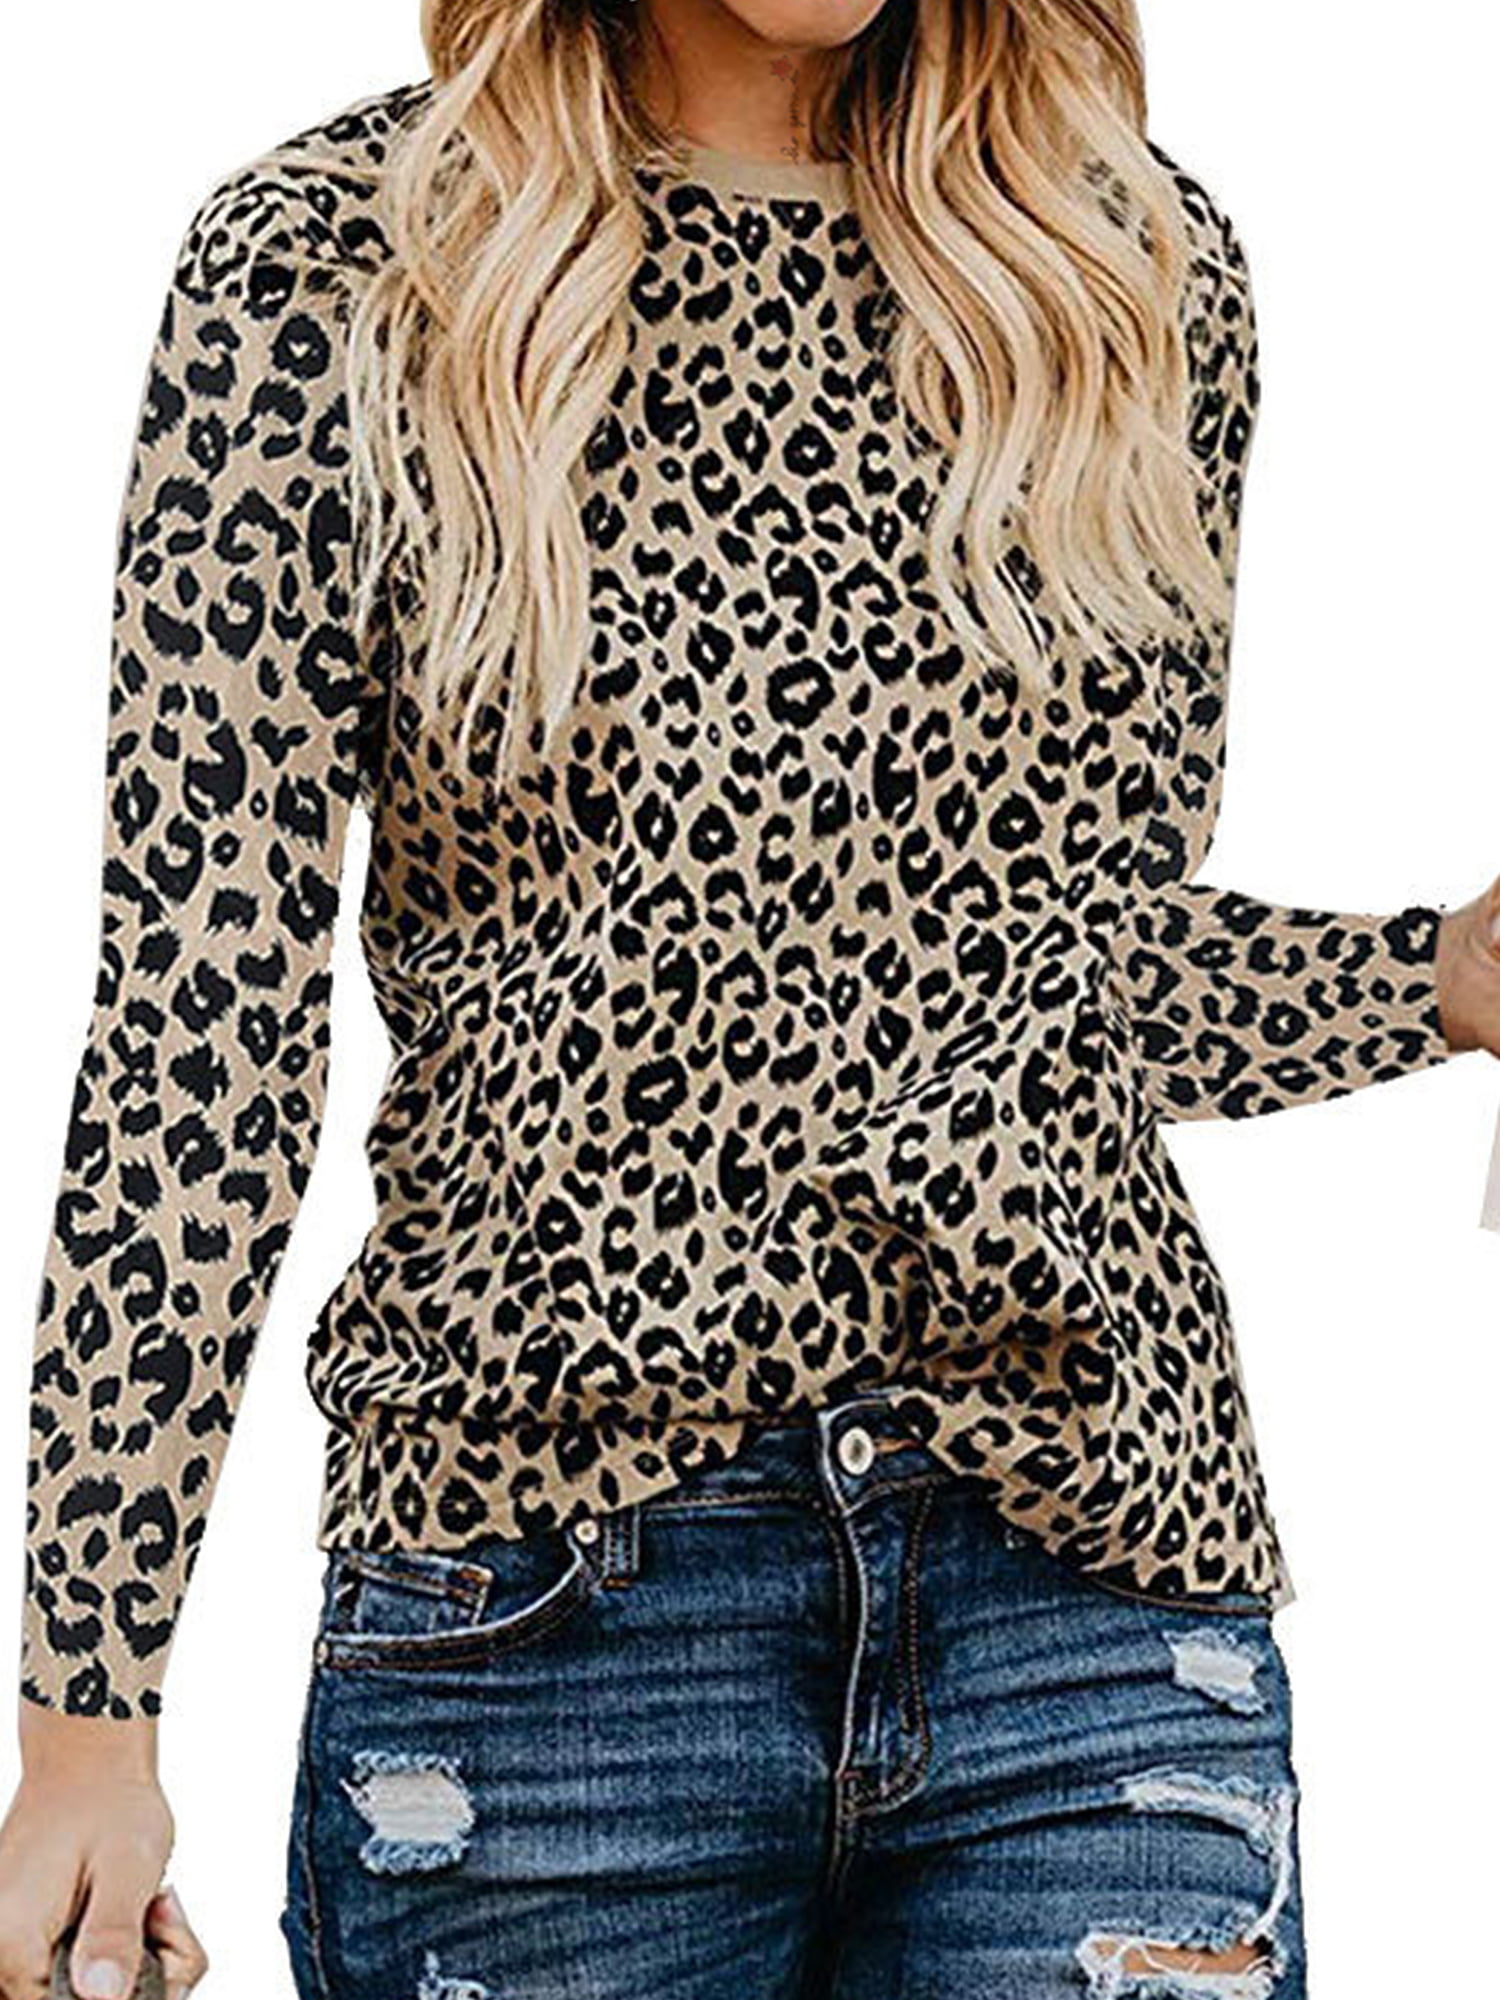 FEDULK Womens Fashion Casual Tops T Shirt Leopard Print Long Sleeve O Neck Pullover Blouse